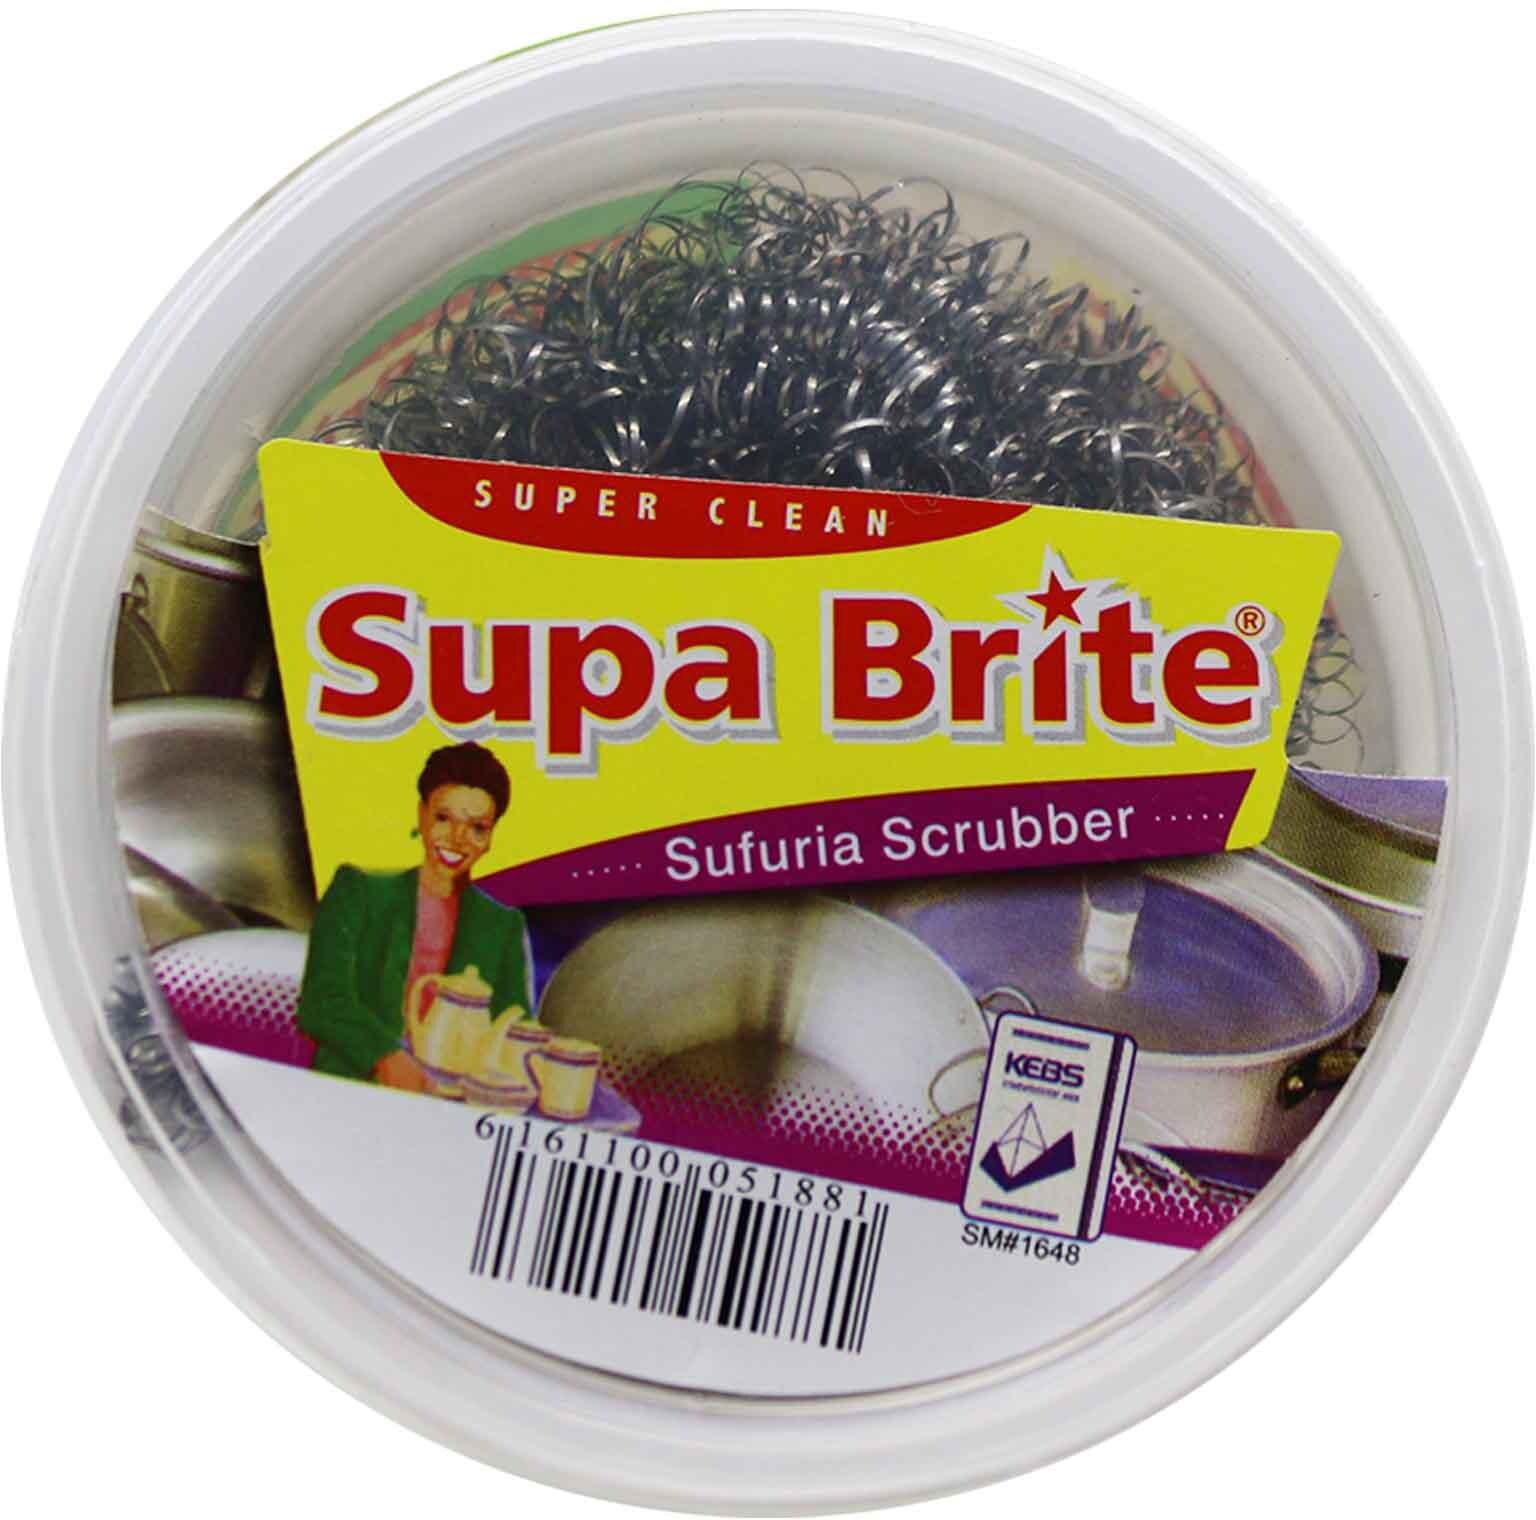 Supa Brite Sufuria Scrubber 1 Piece Silver